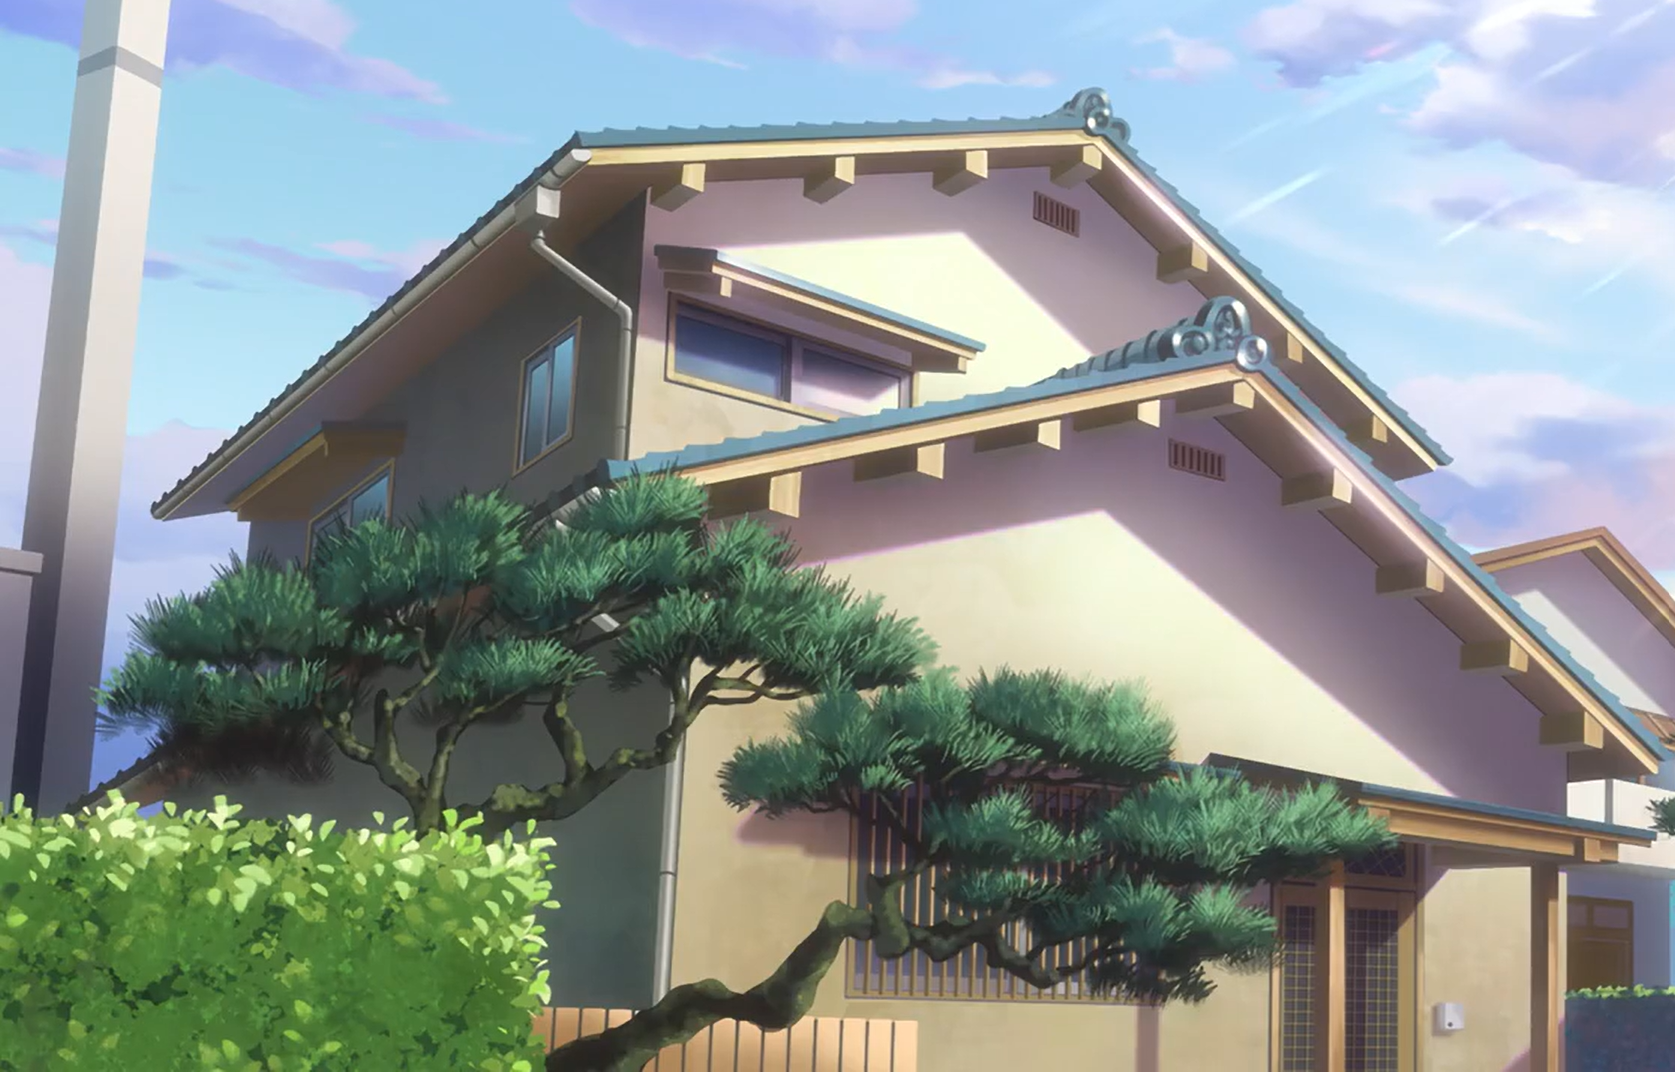 Anime 1675x1072 house drawing artwork